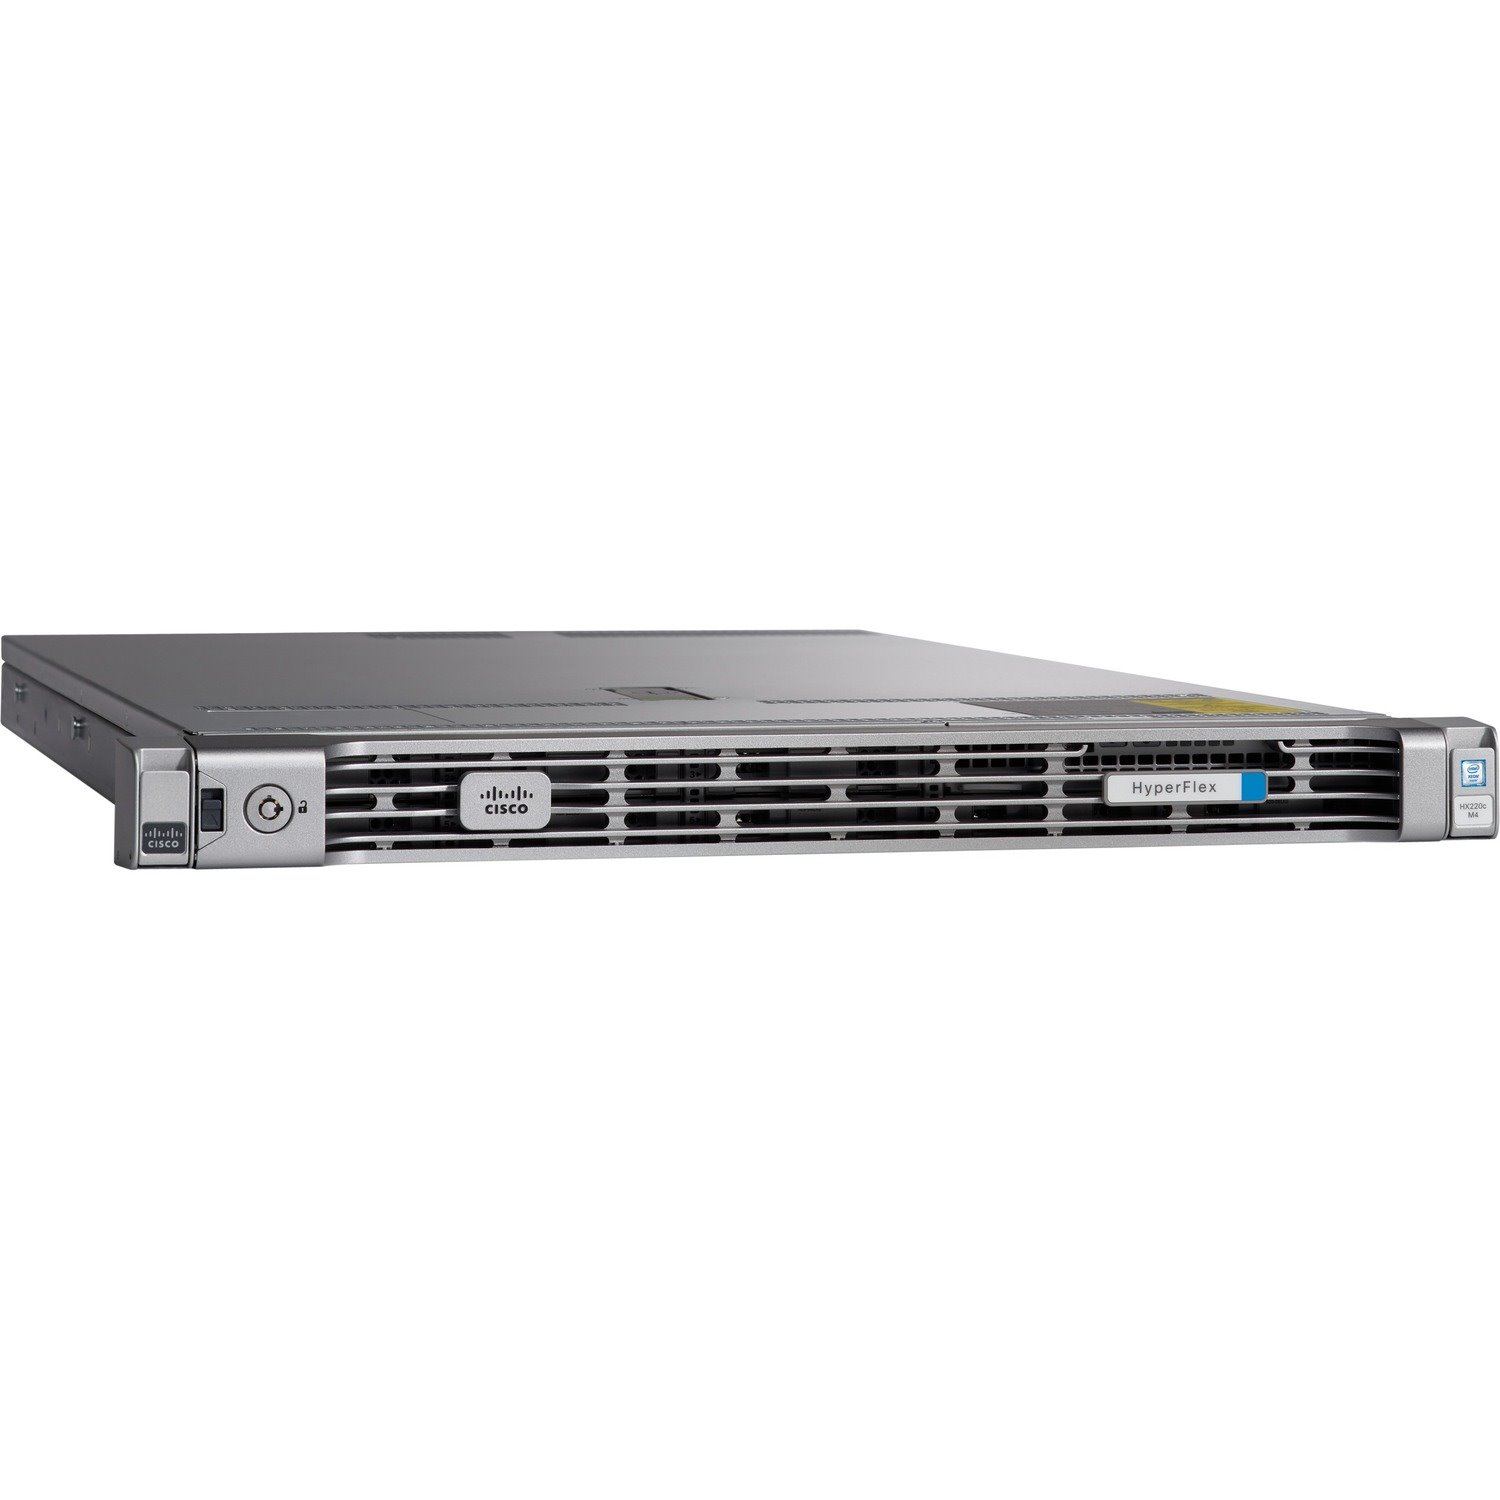 Cisco HyperFlex HX220c M4 1U Rack Server - 2 x Intel Xeon E5-2630 v3 2.40 GHz - 128 GB RAM - 12Gb/s SAS Controller